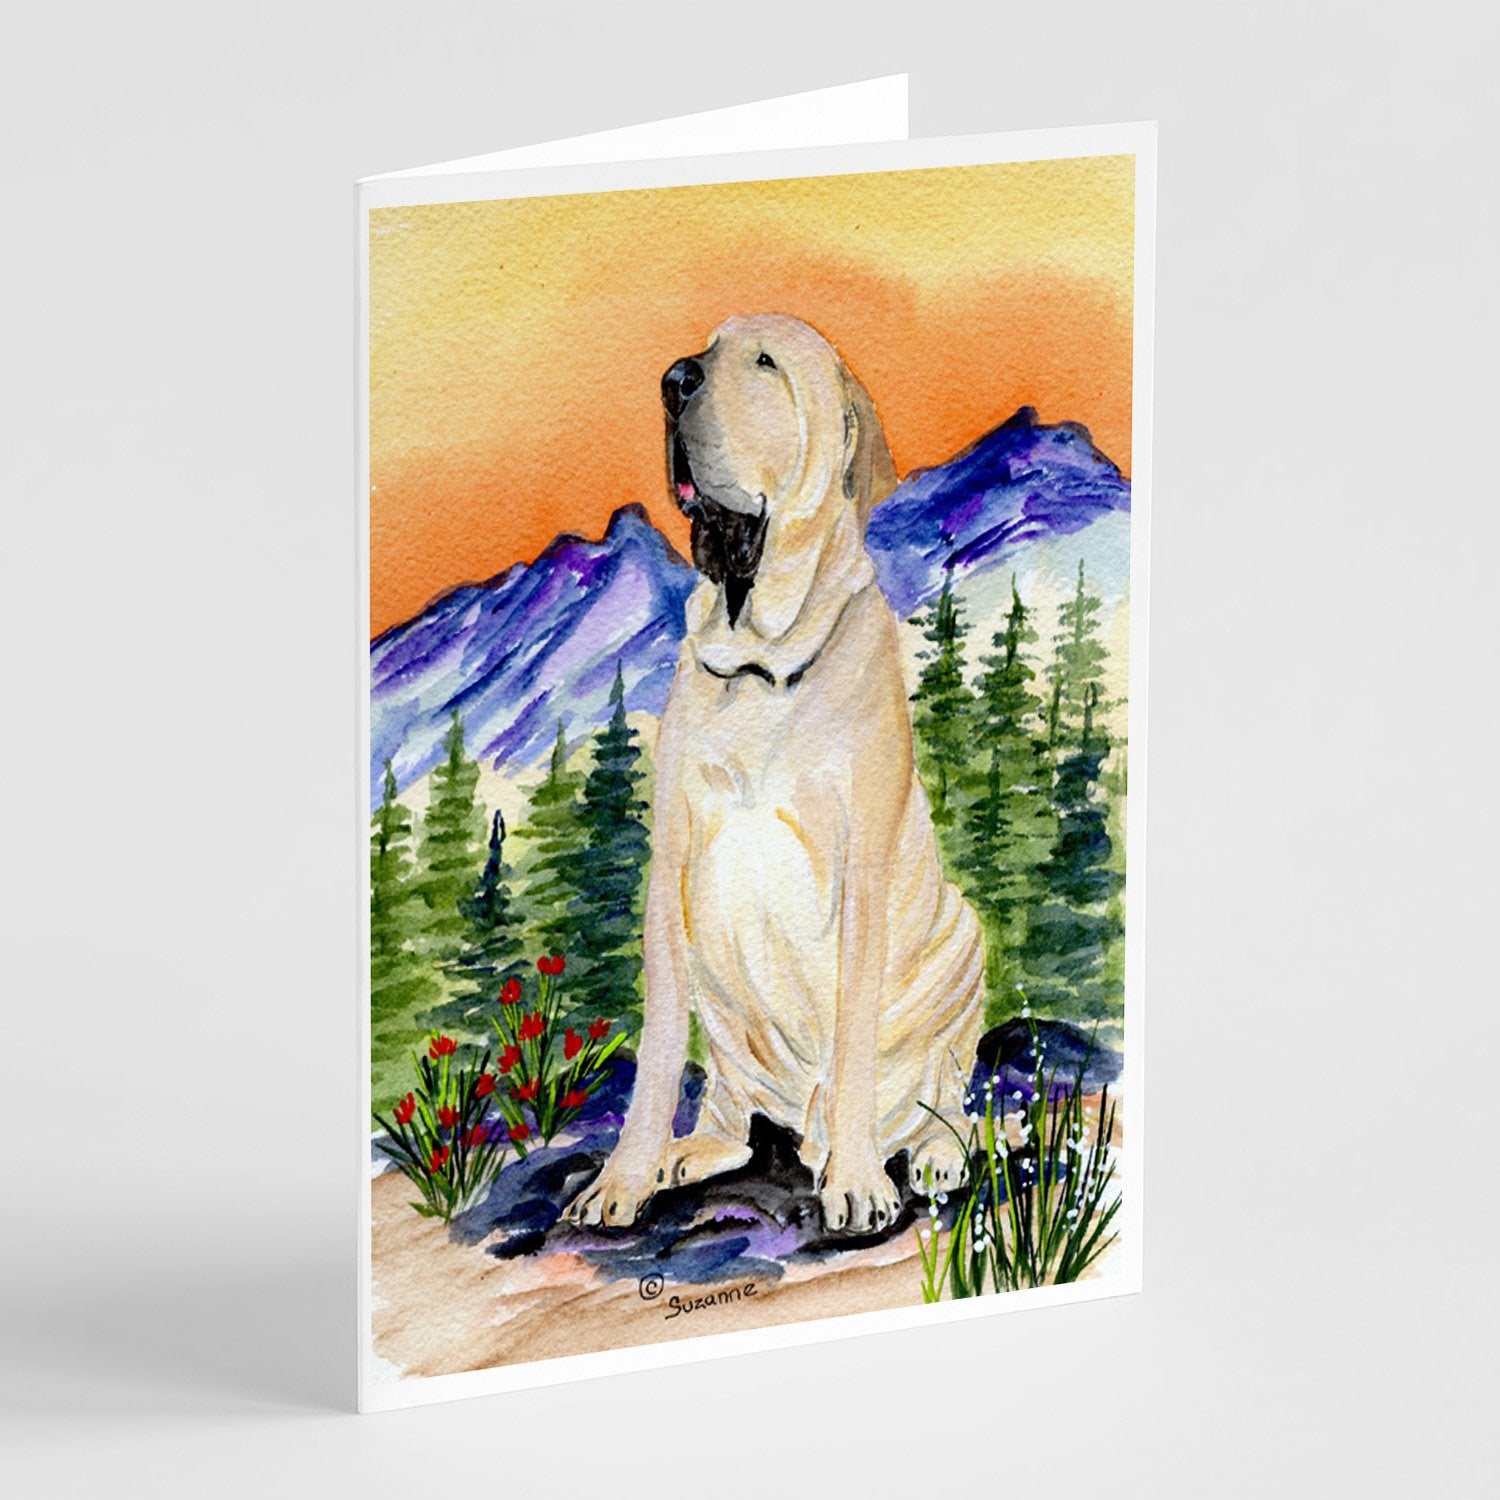 Buy this Brazilian Mastiff  / Fila Brasileiro Greeting Cards and Envelopes Pack of 8